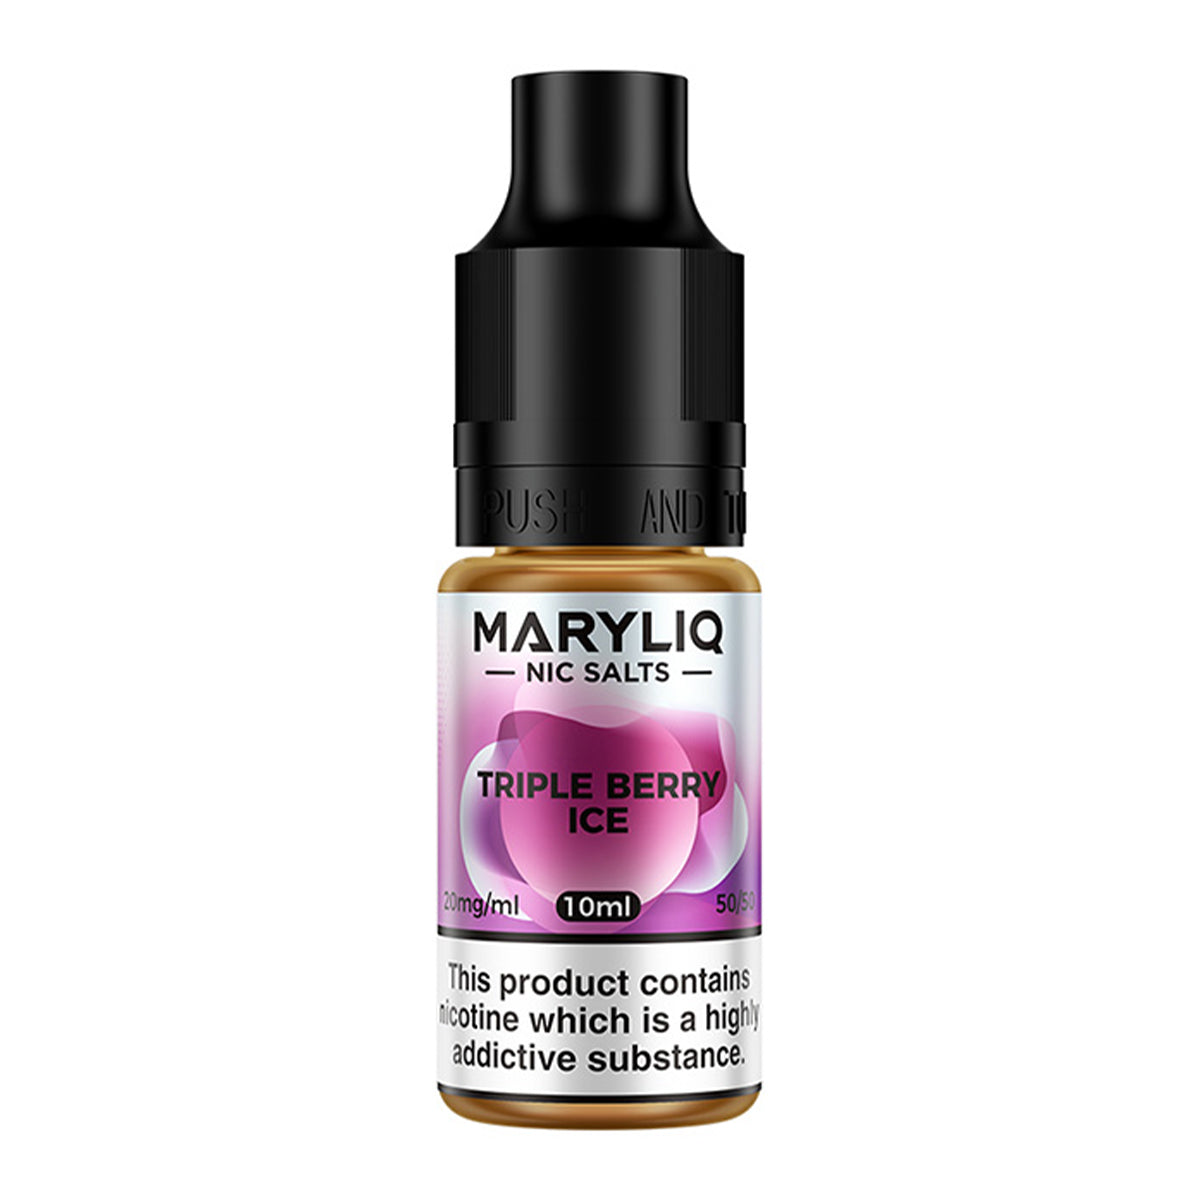 Triple Berry Ice 10ml Nicotine Salt by Lost Mary Maryliq